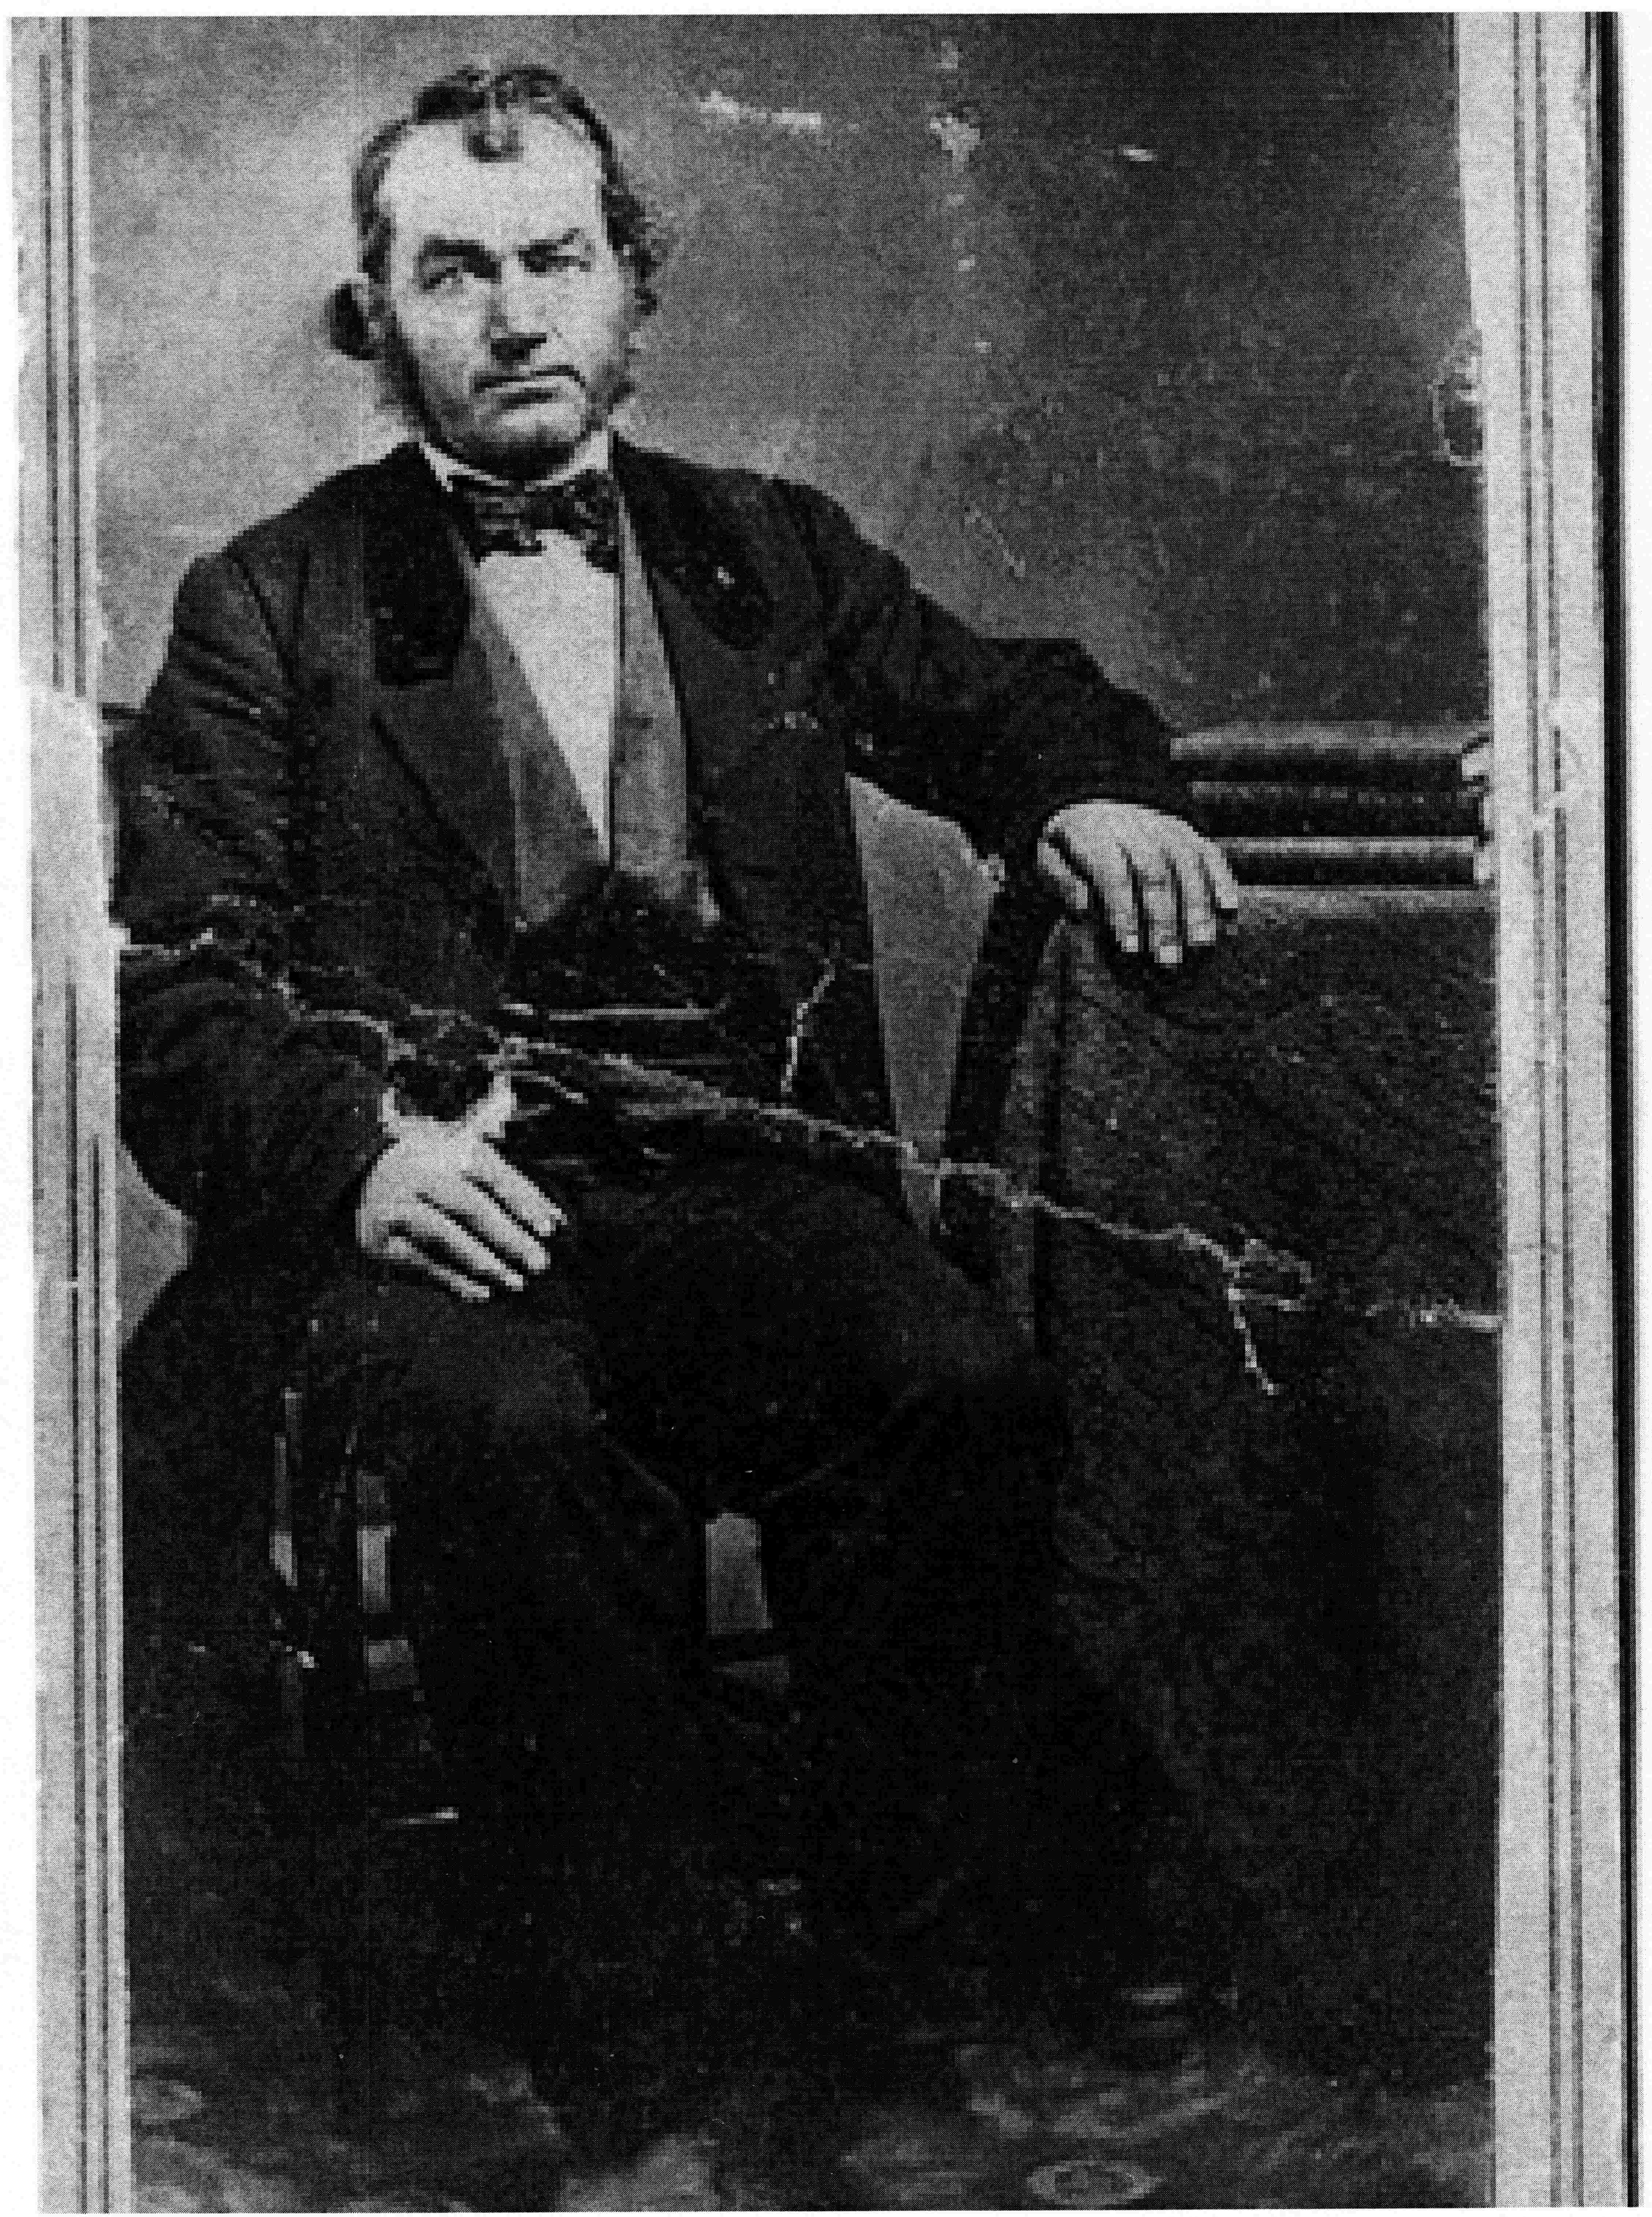 Richard Sutton about 1856